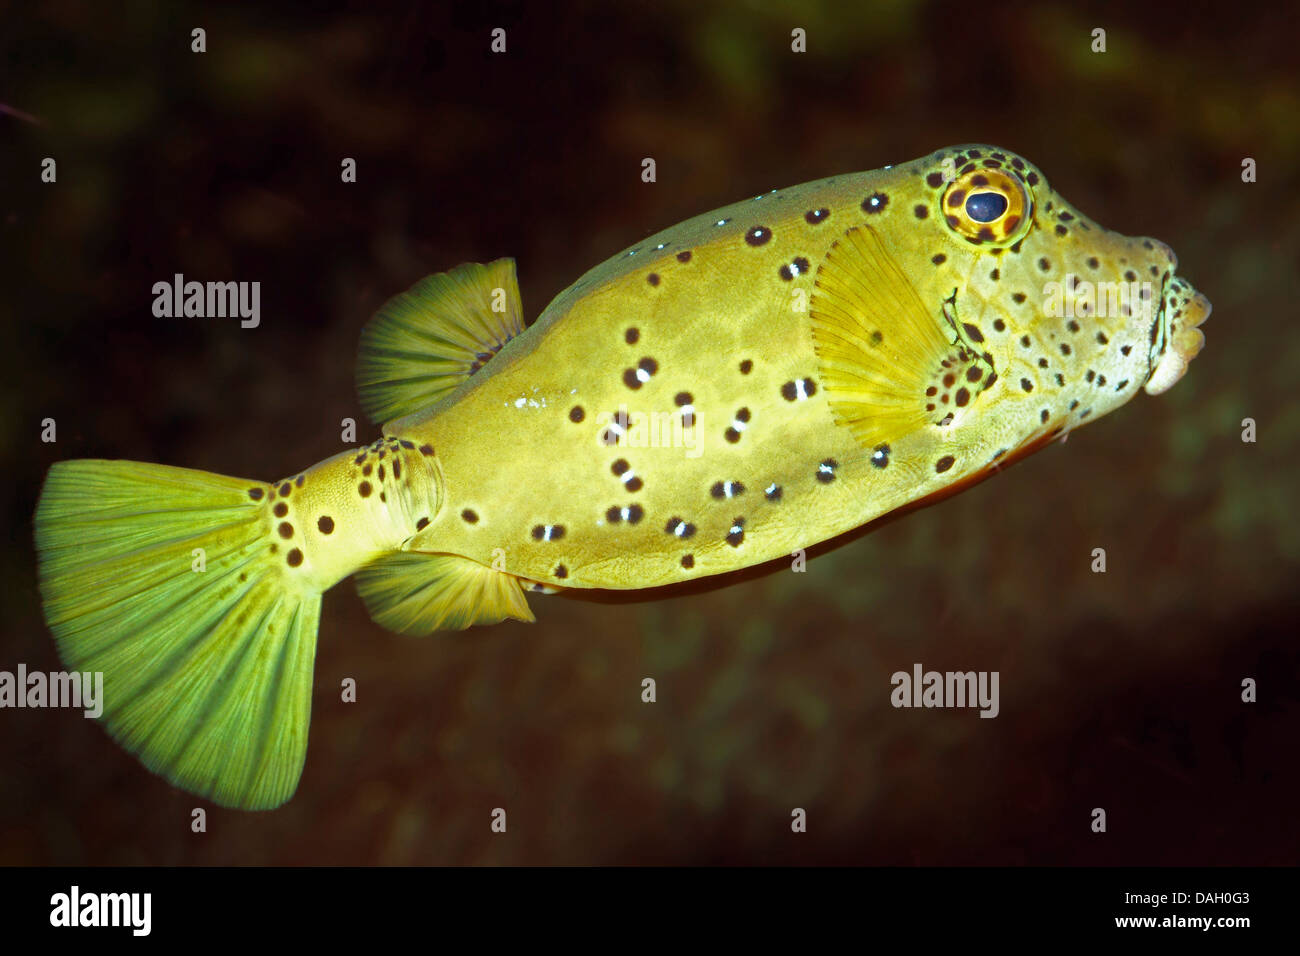 blue-spotted boxfish, yellow boxfish, polka dot boxfish (Ostracion cubicus, Ostracion tuberculatus), swimming Stock Photo